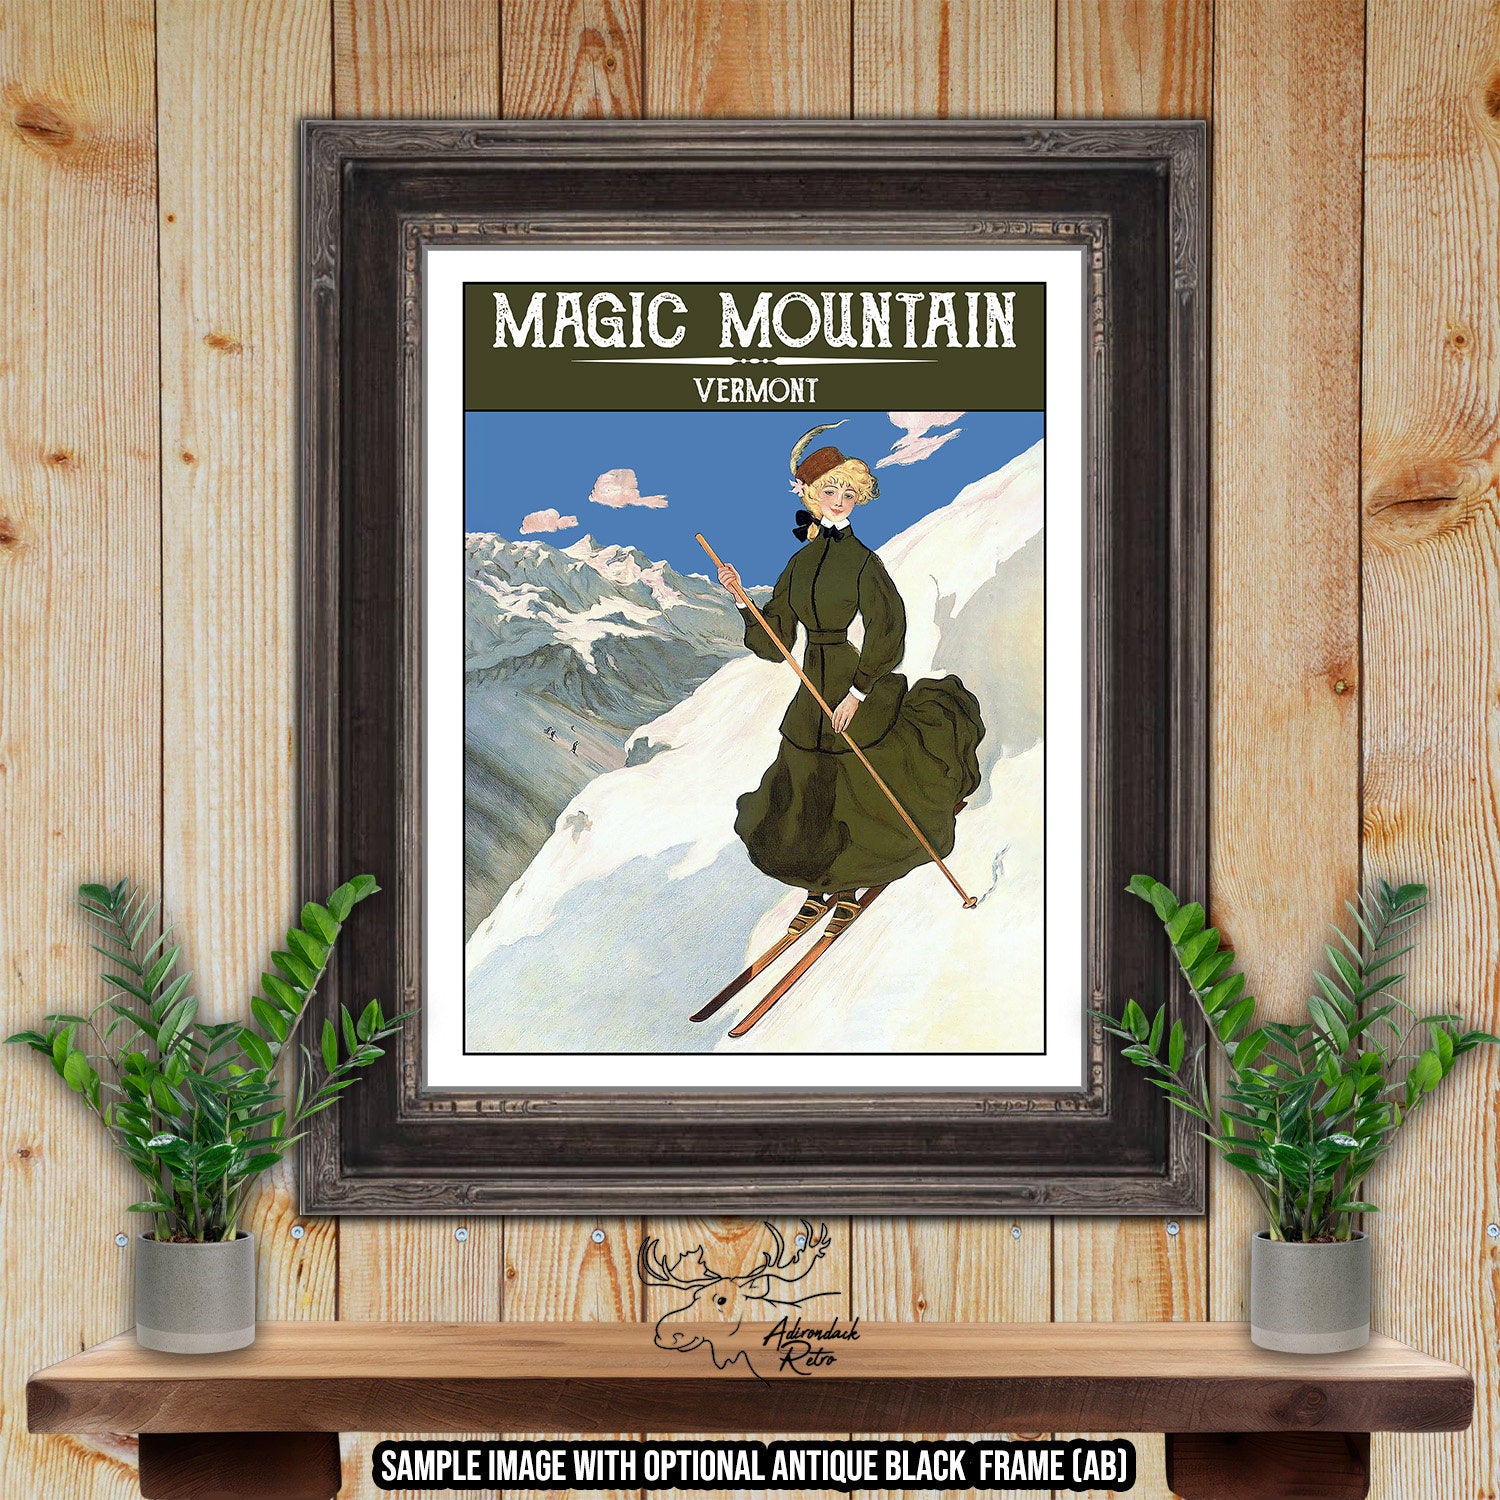 Magic Mountain Vermont Retro Ski Resort Print at Adirondack Retro